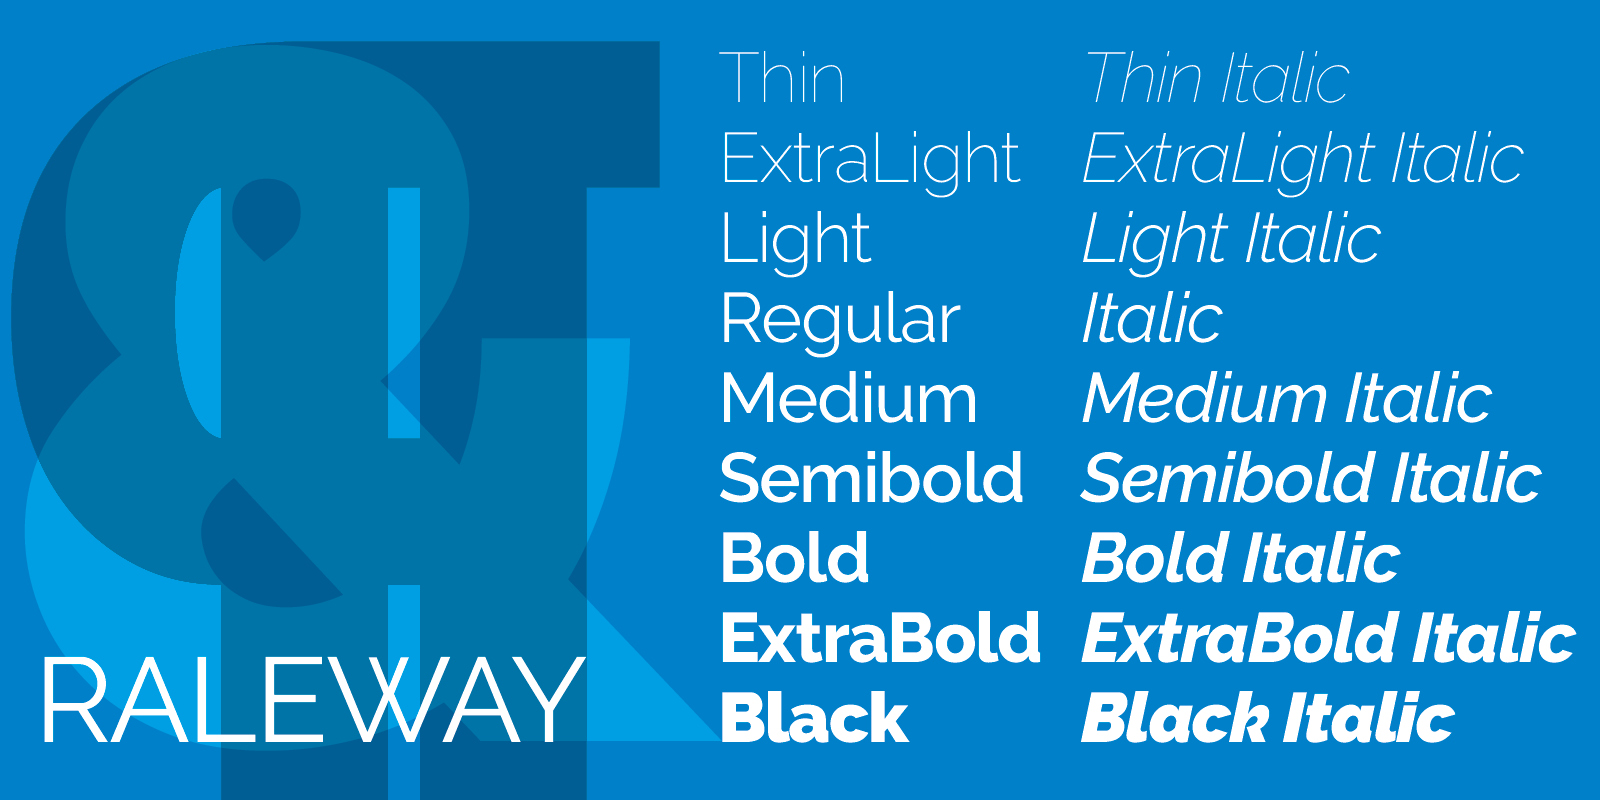 Card displaying Raleway typeface in various styles